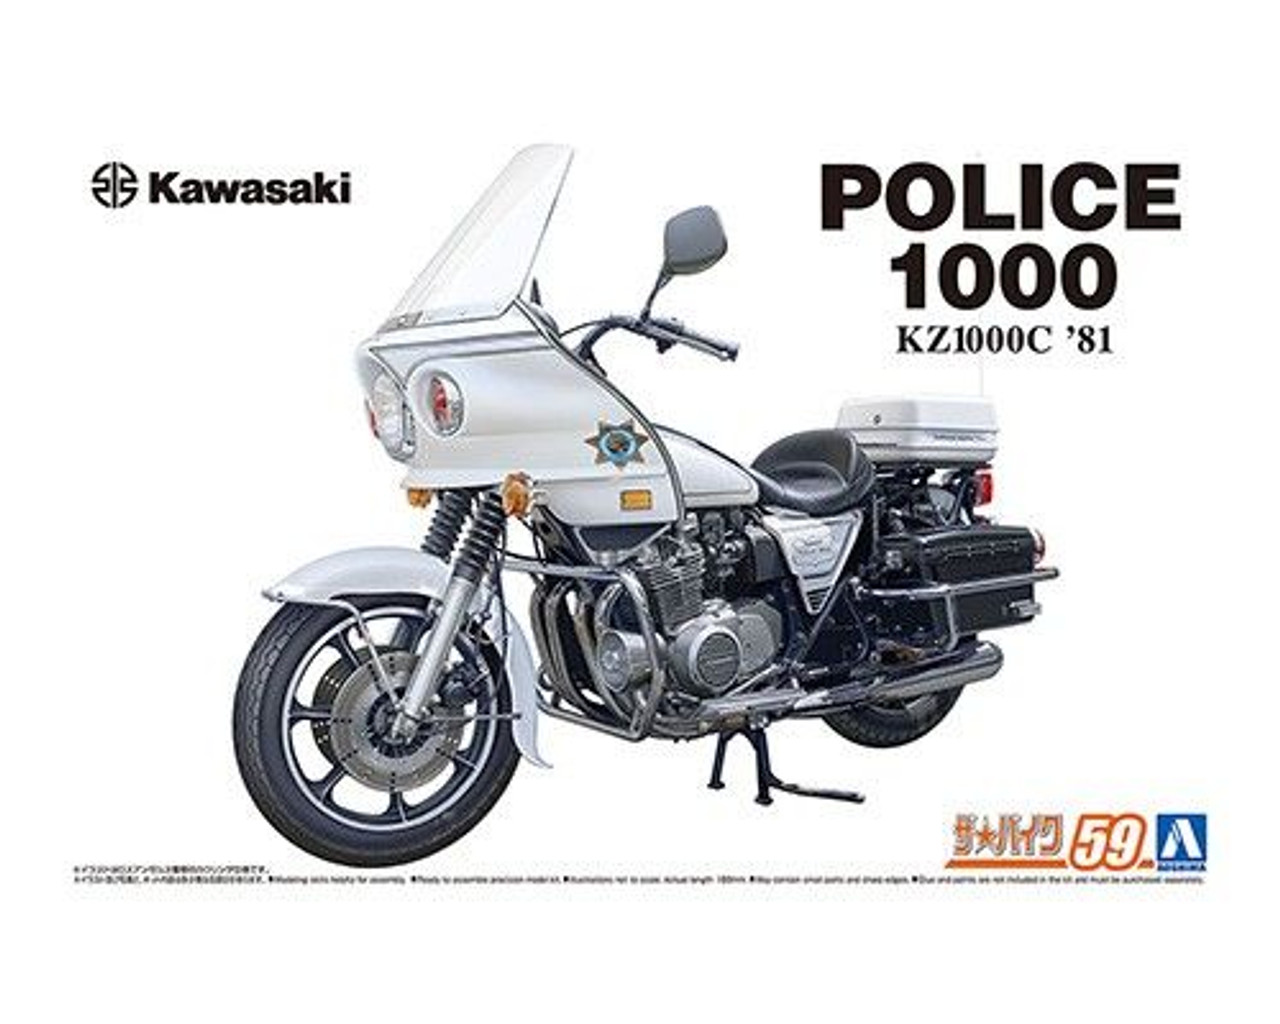 Kawasaki kz1000 - バイク車体